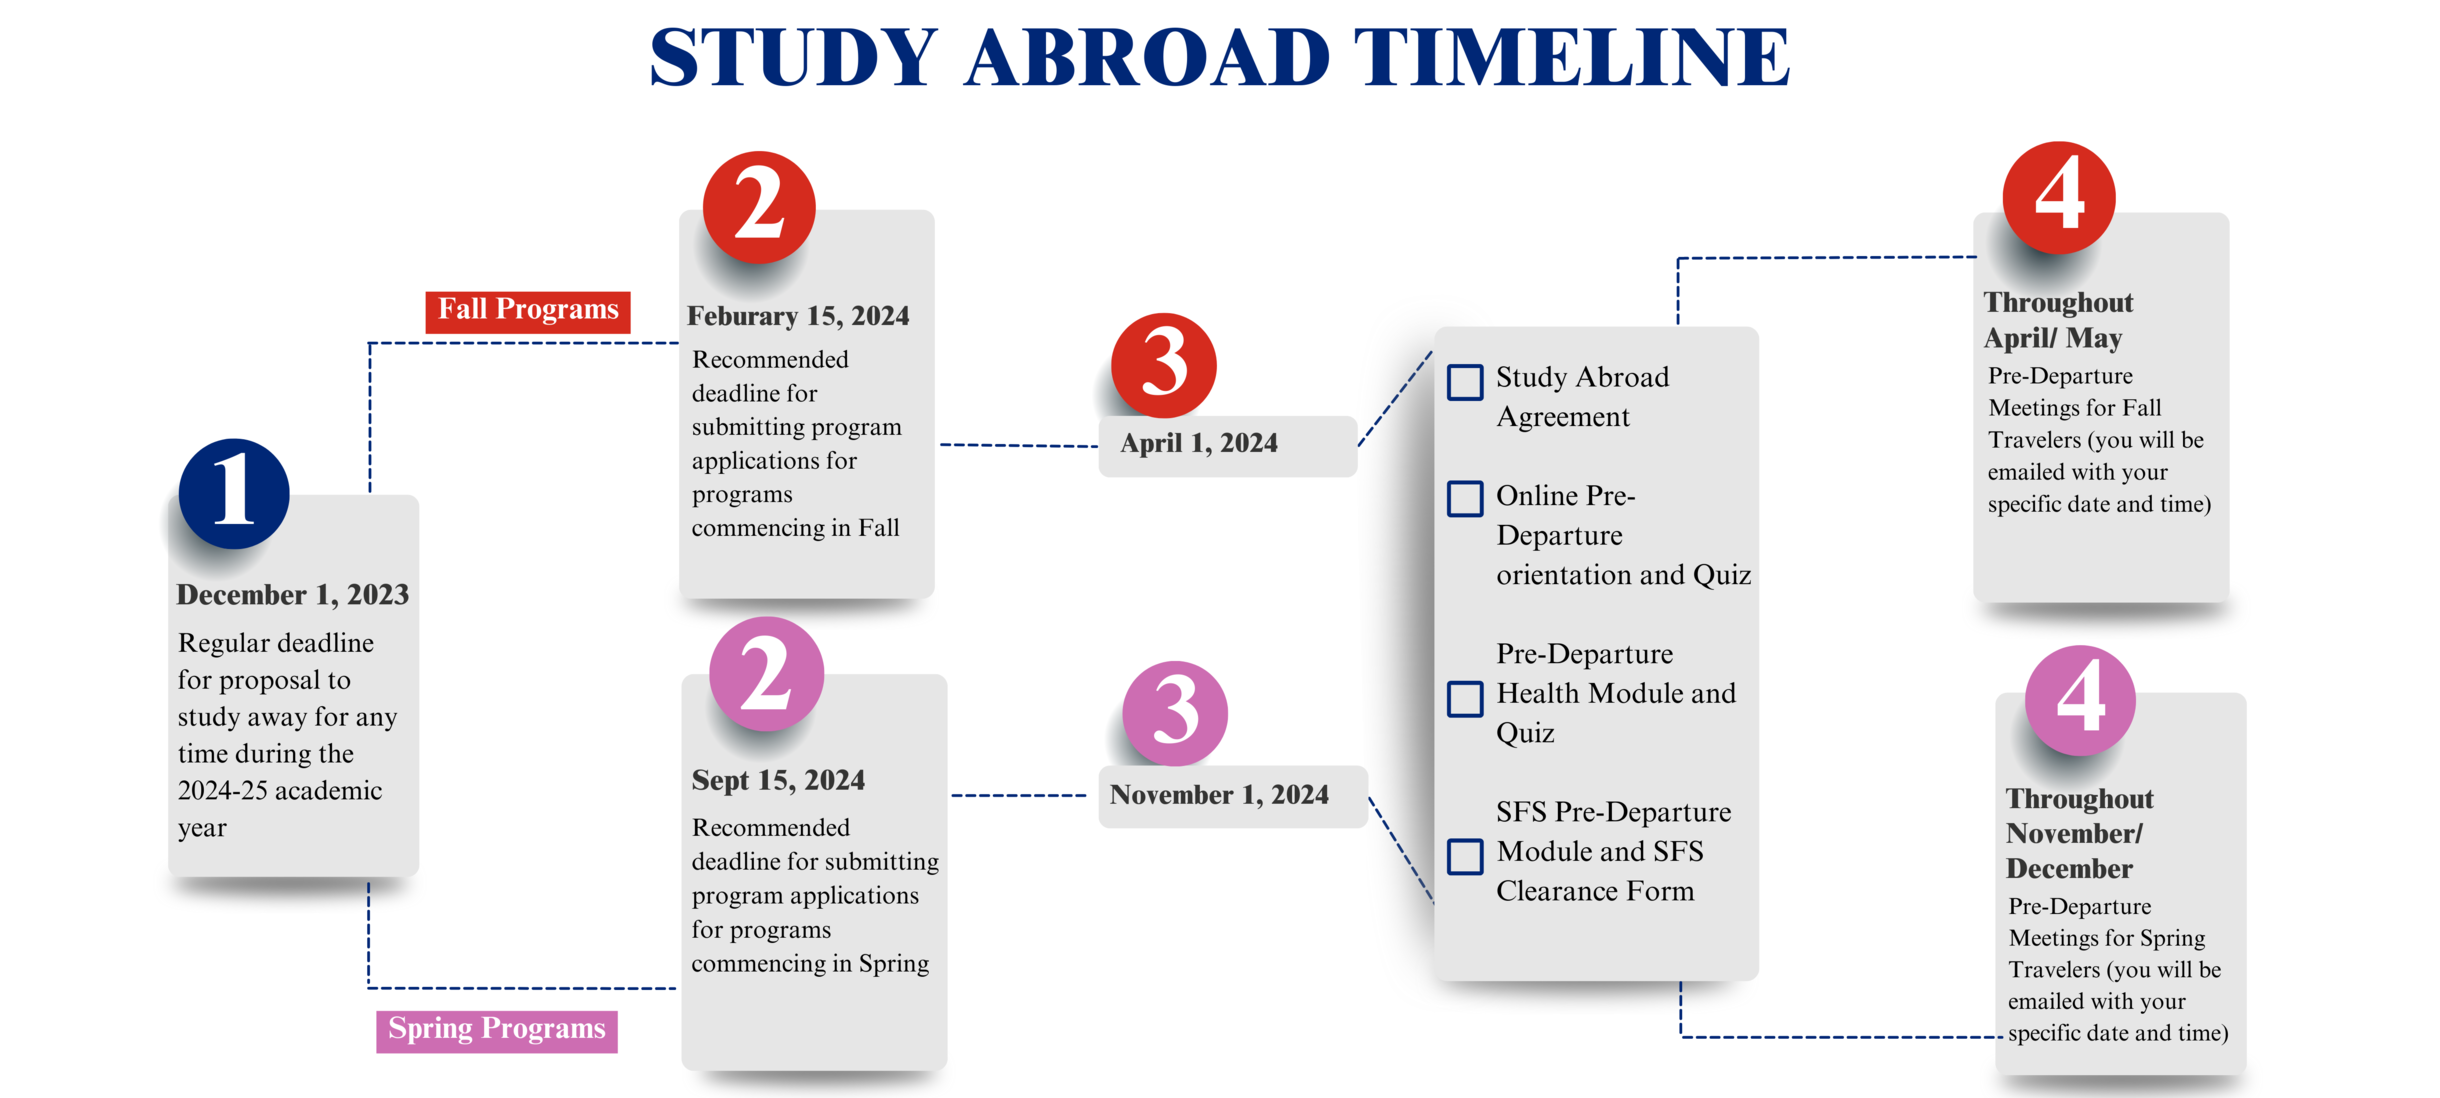 Study Abroad Timeline 